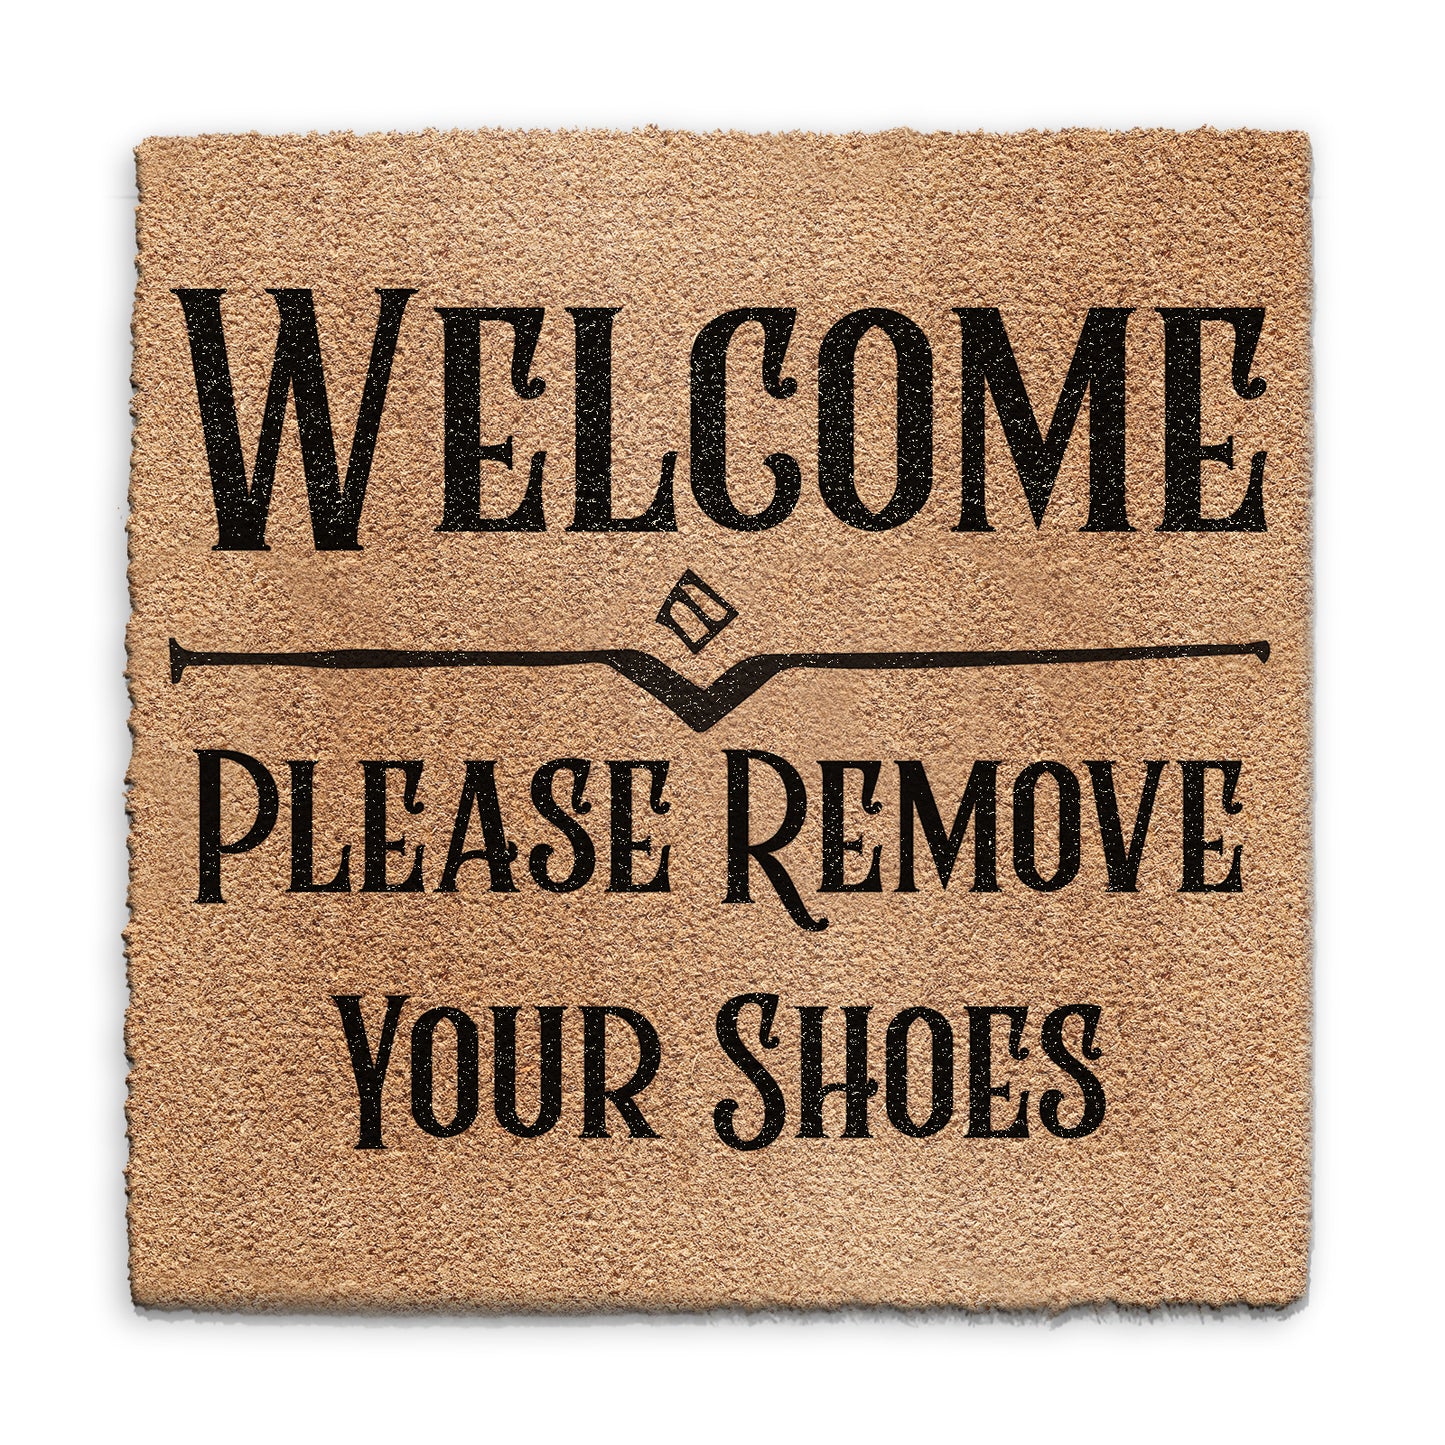 Coir Doormat - Remove Your Shoes